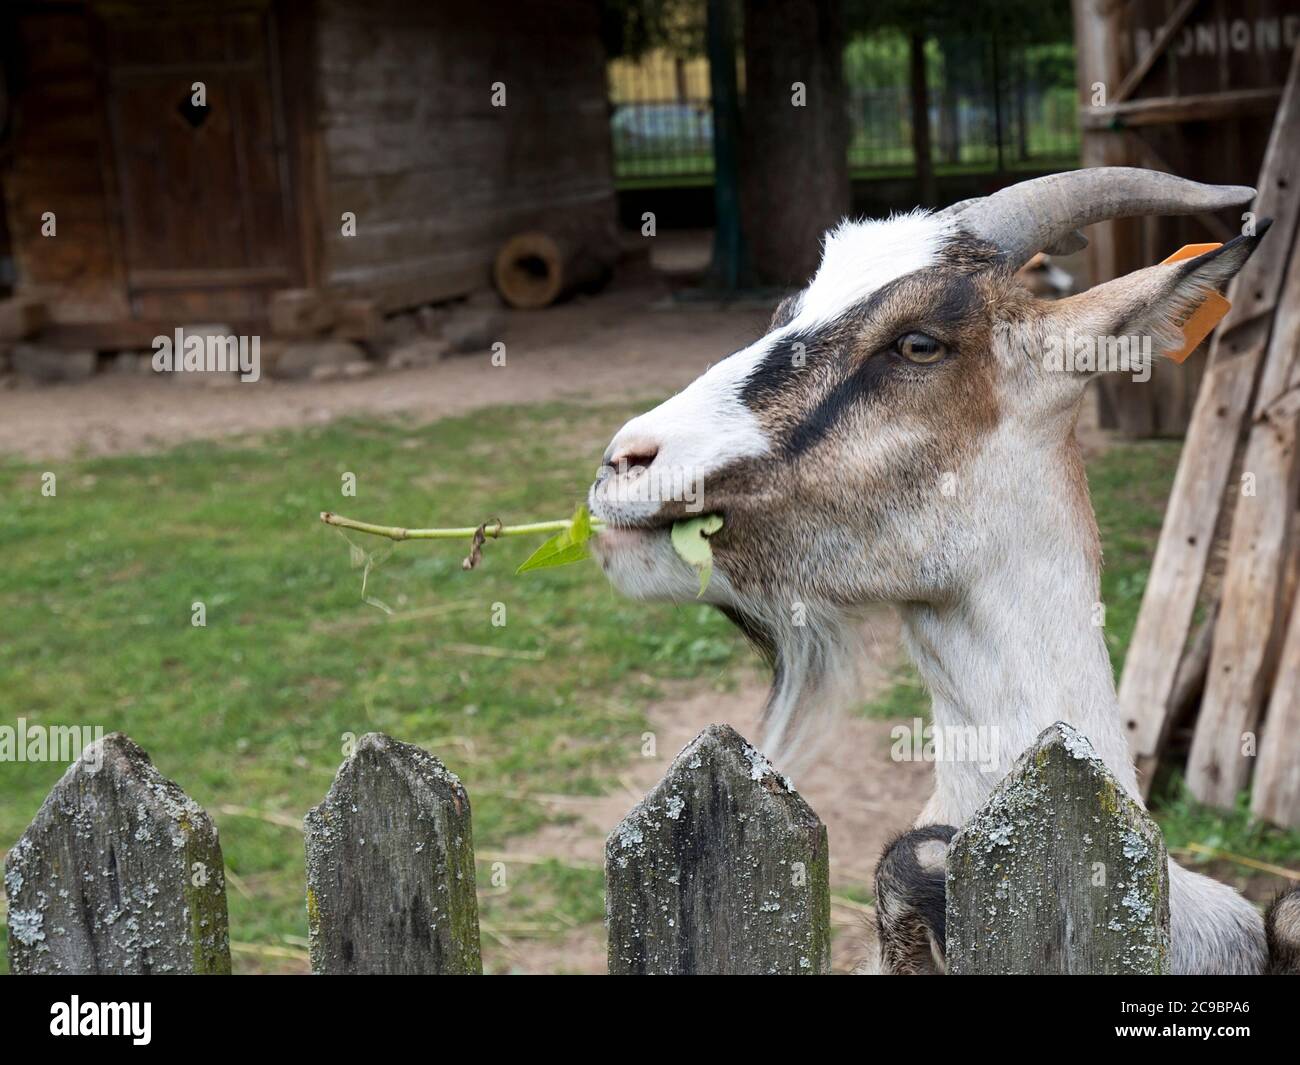 Goat on the farm, a portrait Stock Photo